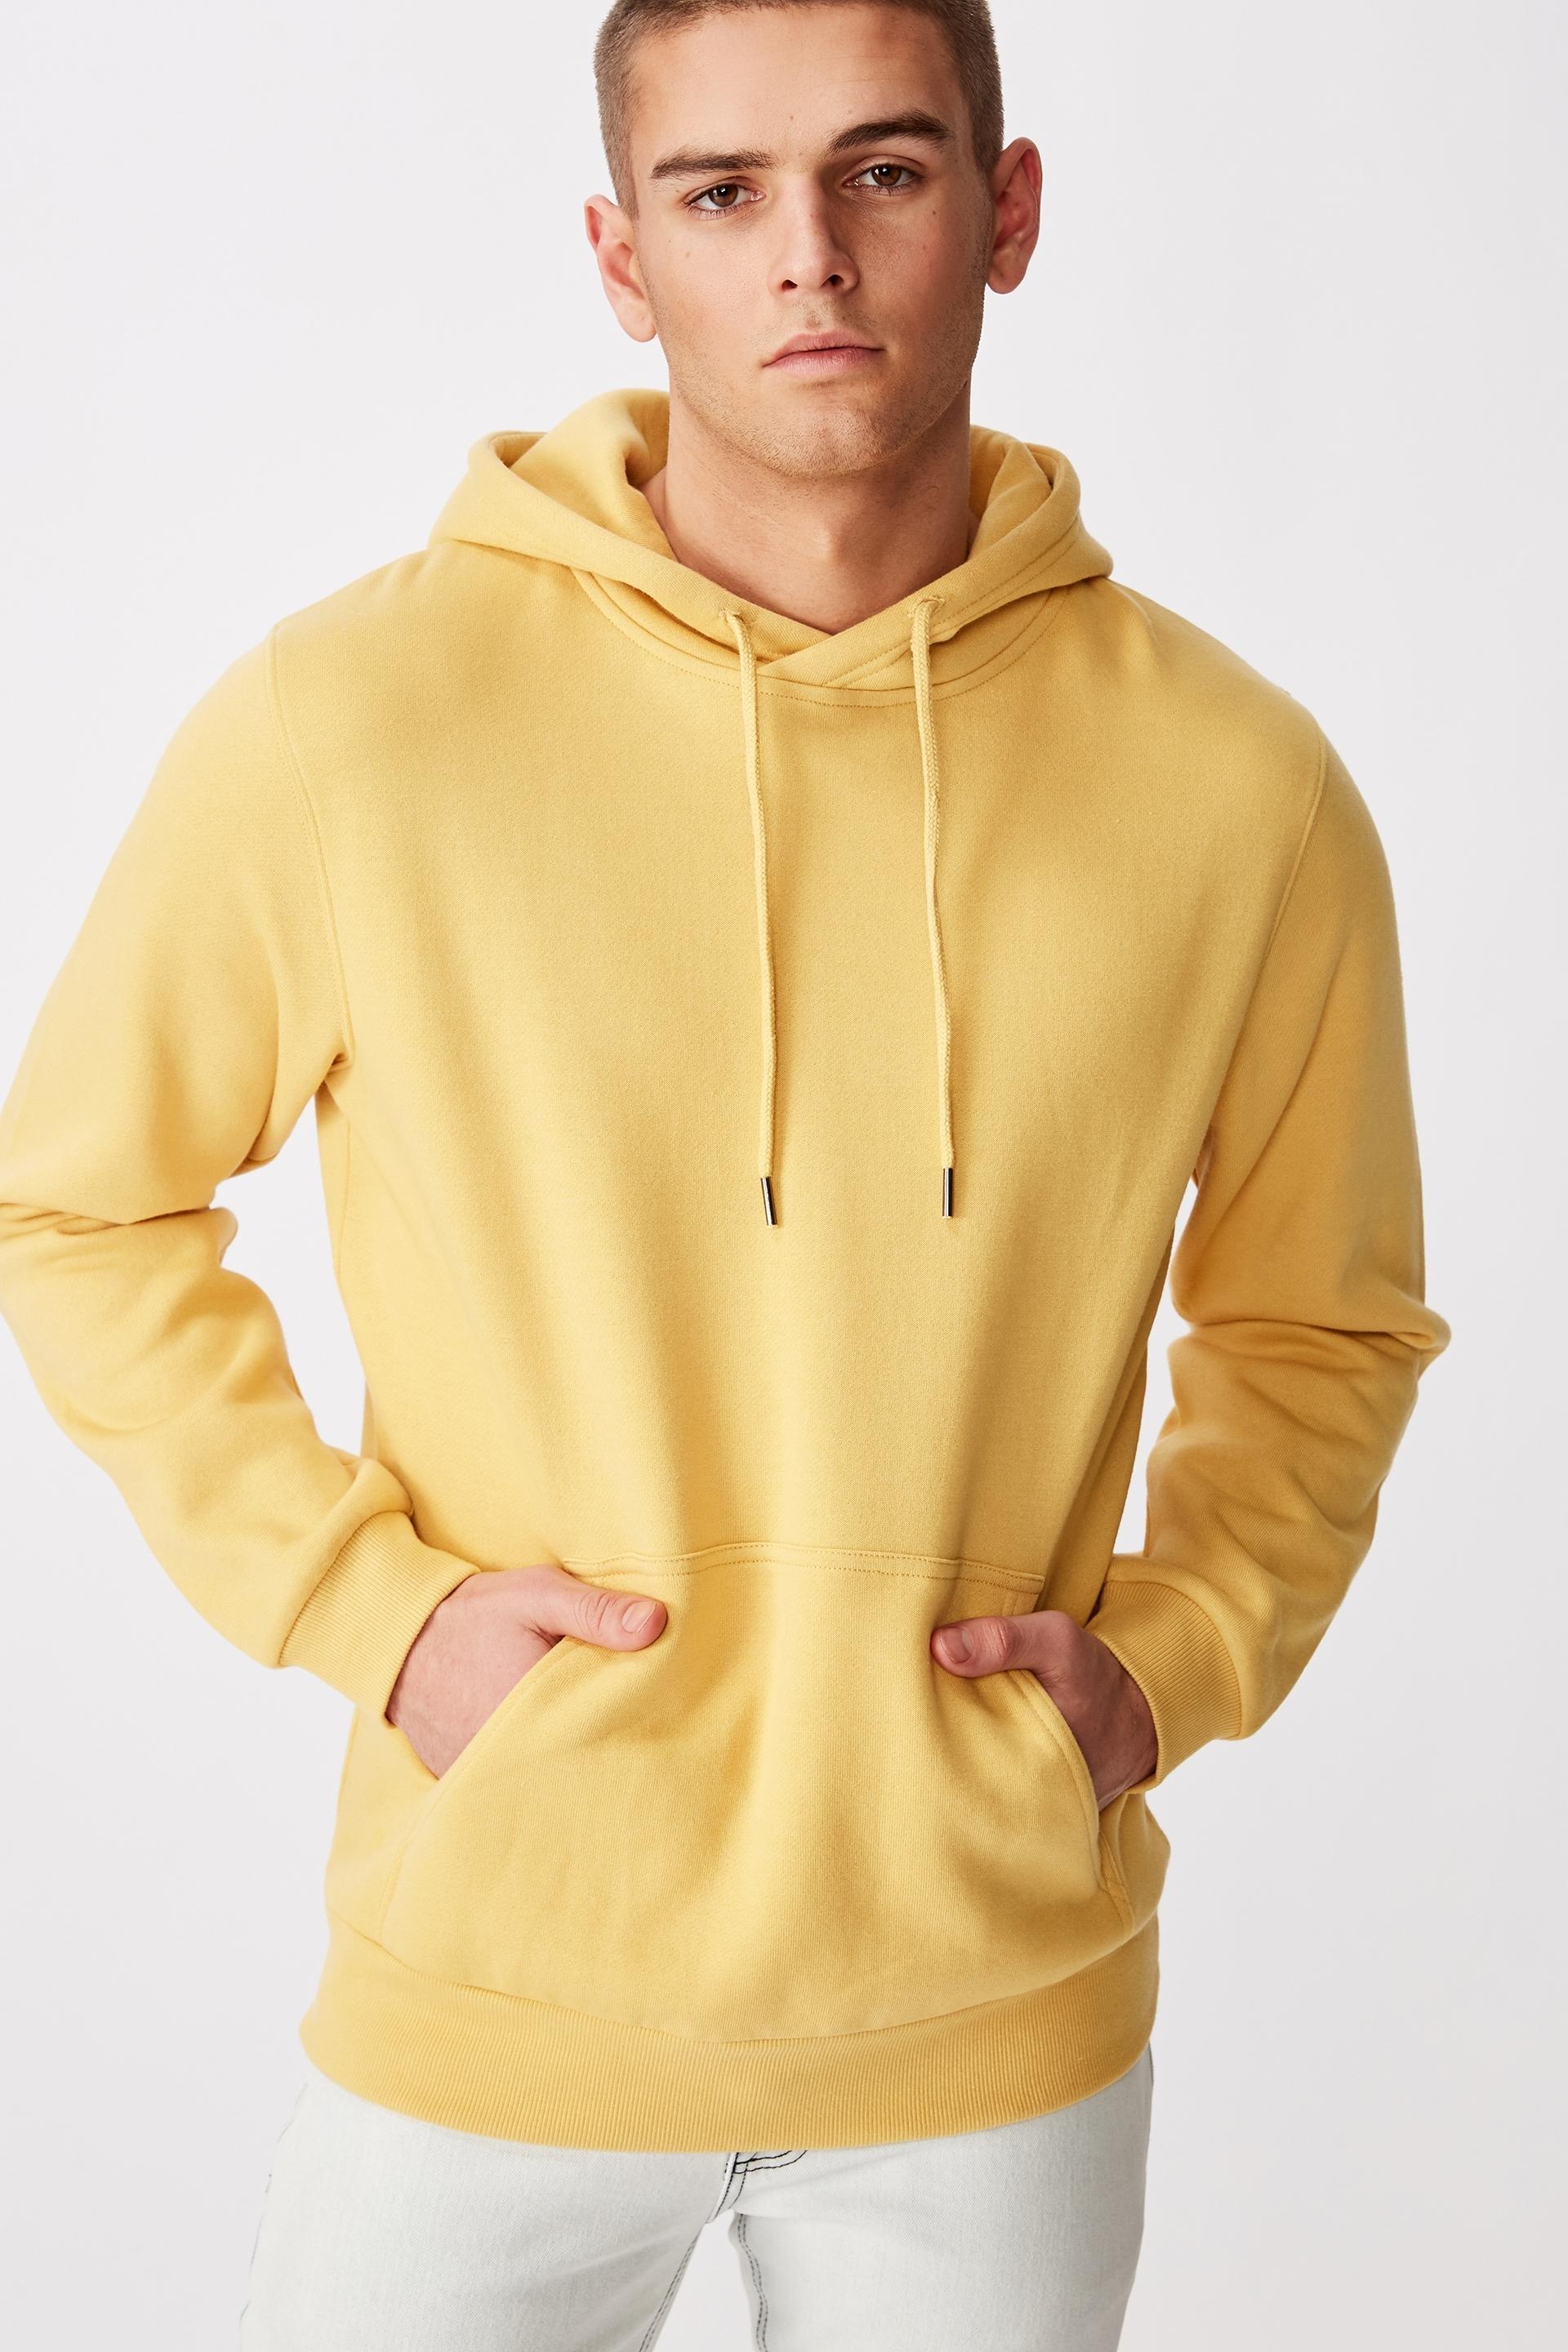 Basic hoodie - yellow Factorie Hoodies & Sweats | Superbalist.com